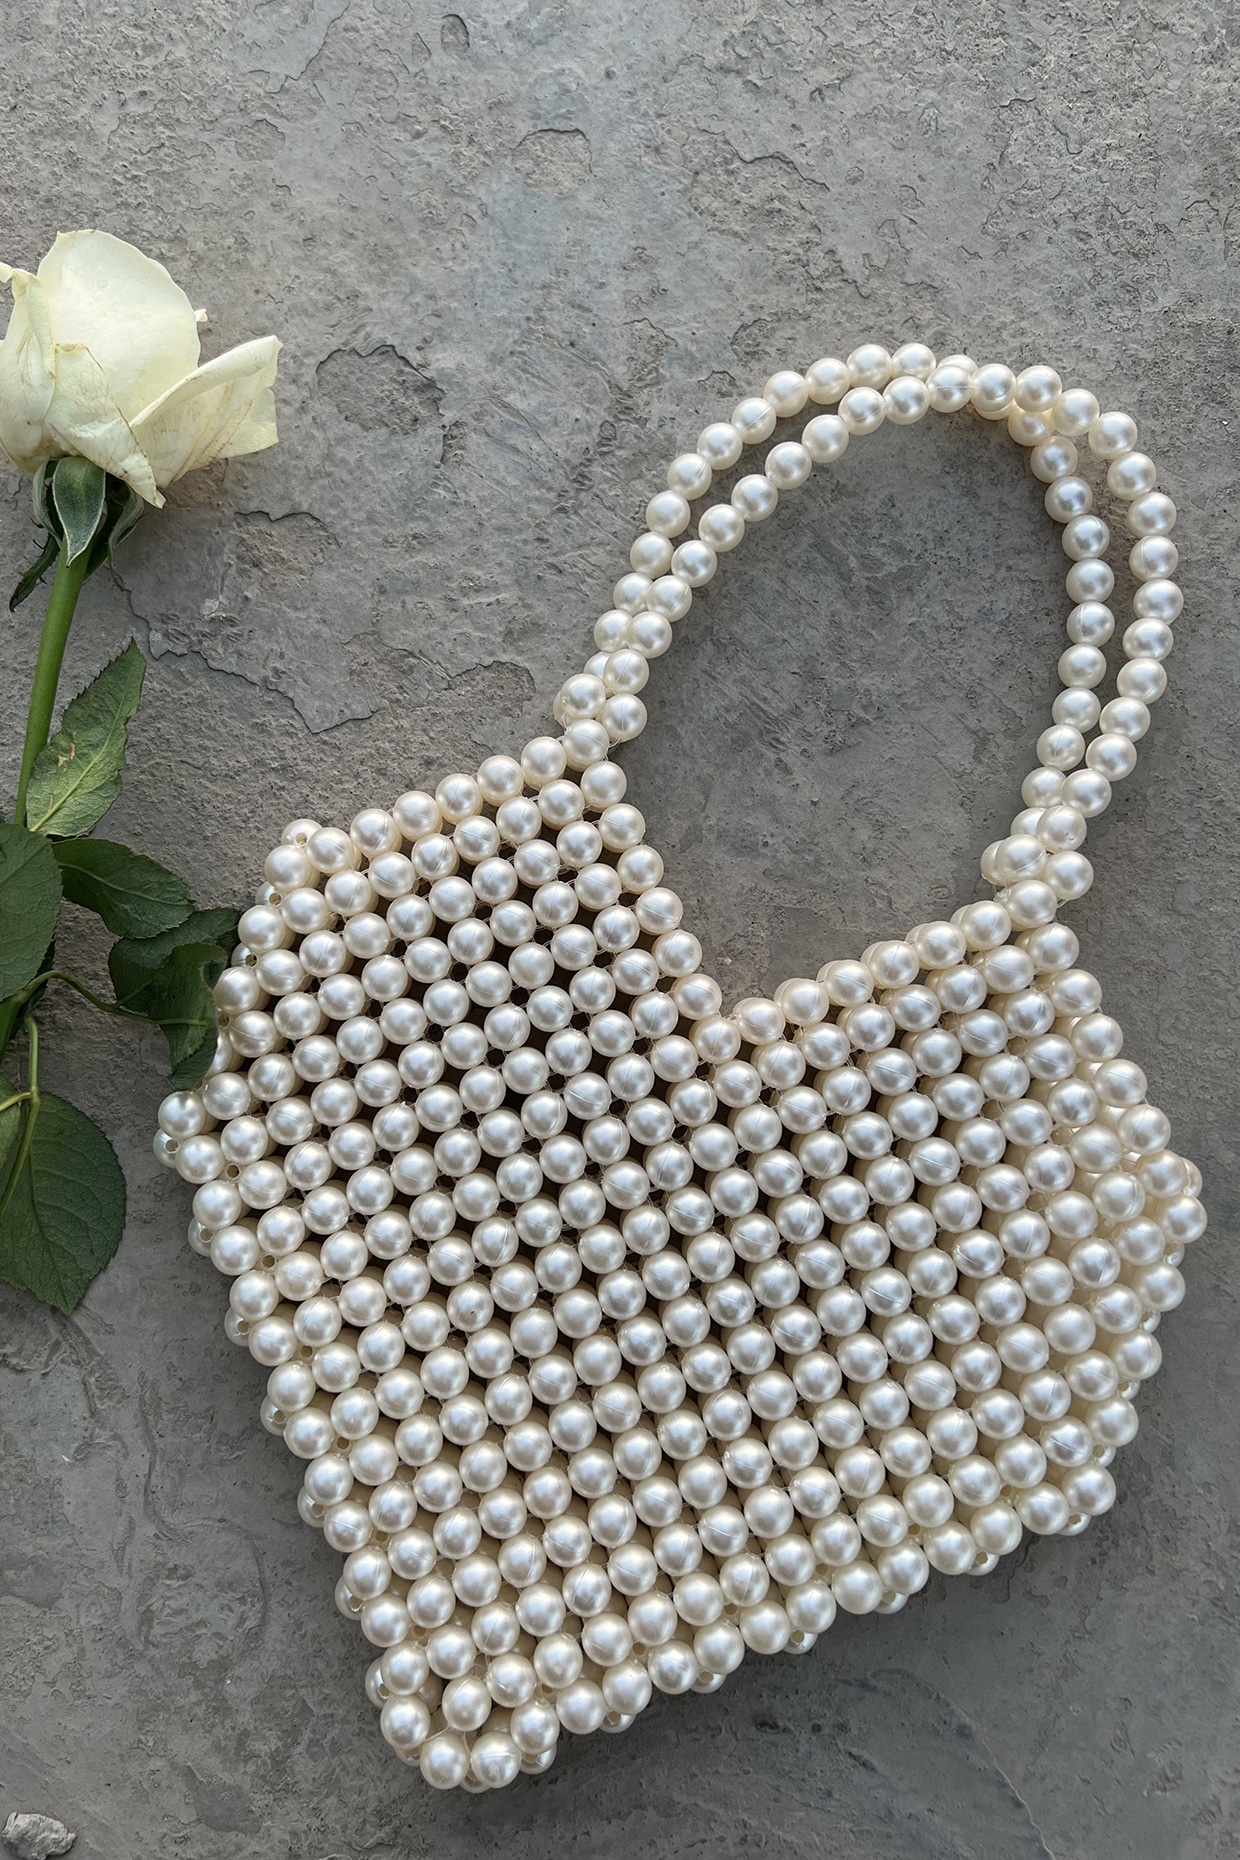 Amazon.com: RARITYUS Women Evening Bag Silk-Like Satin Rose Shaped Clutch Handbag  Purse with Elegant Metal Handle for Party Wedding : Clothing, Shoes &  Jewelry